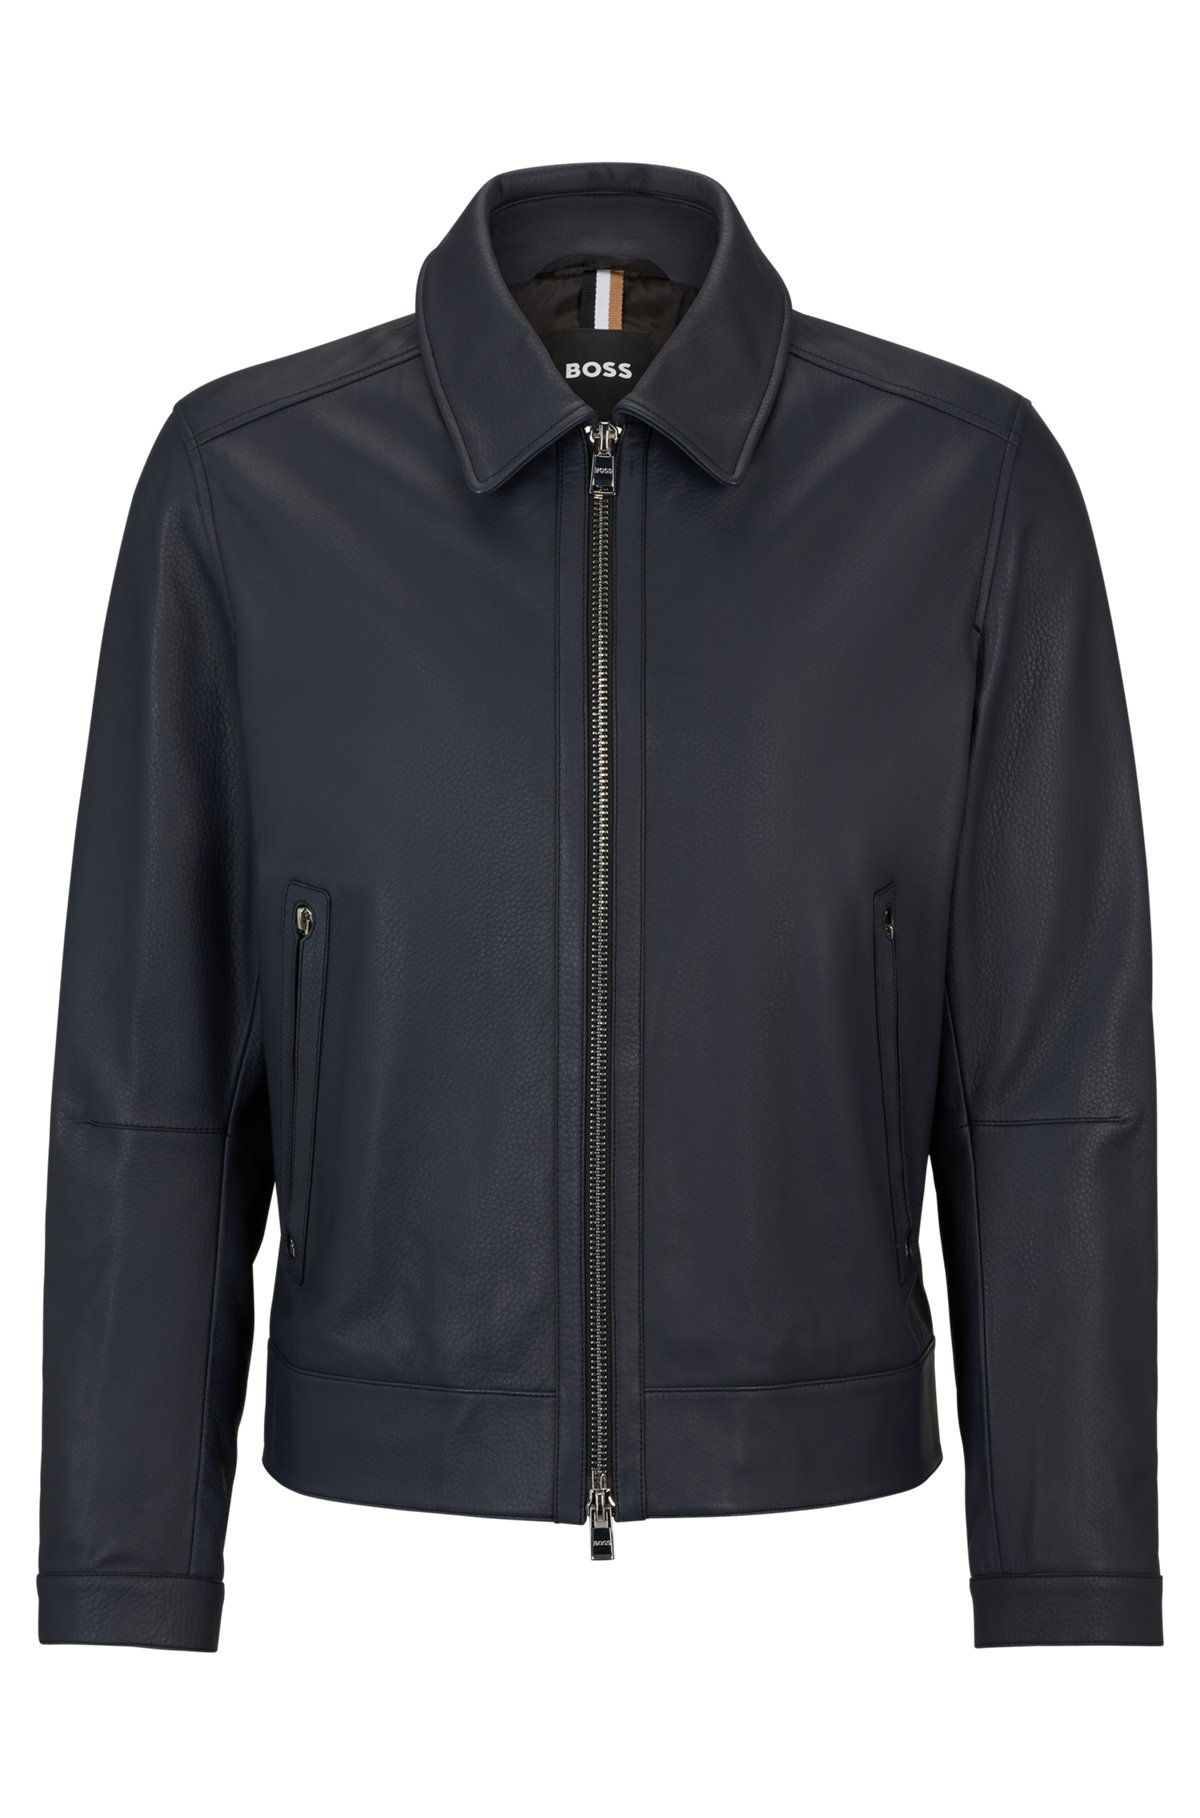 Hugo Boss CALF Leather Jacket Size52カラーグリーン - ライダース